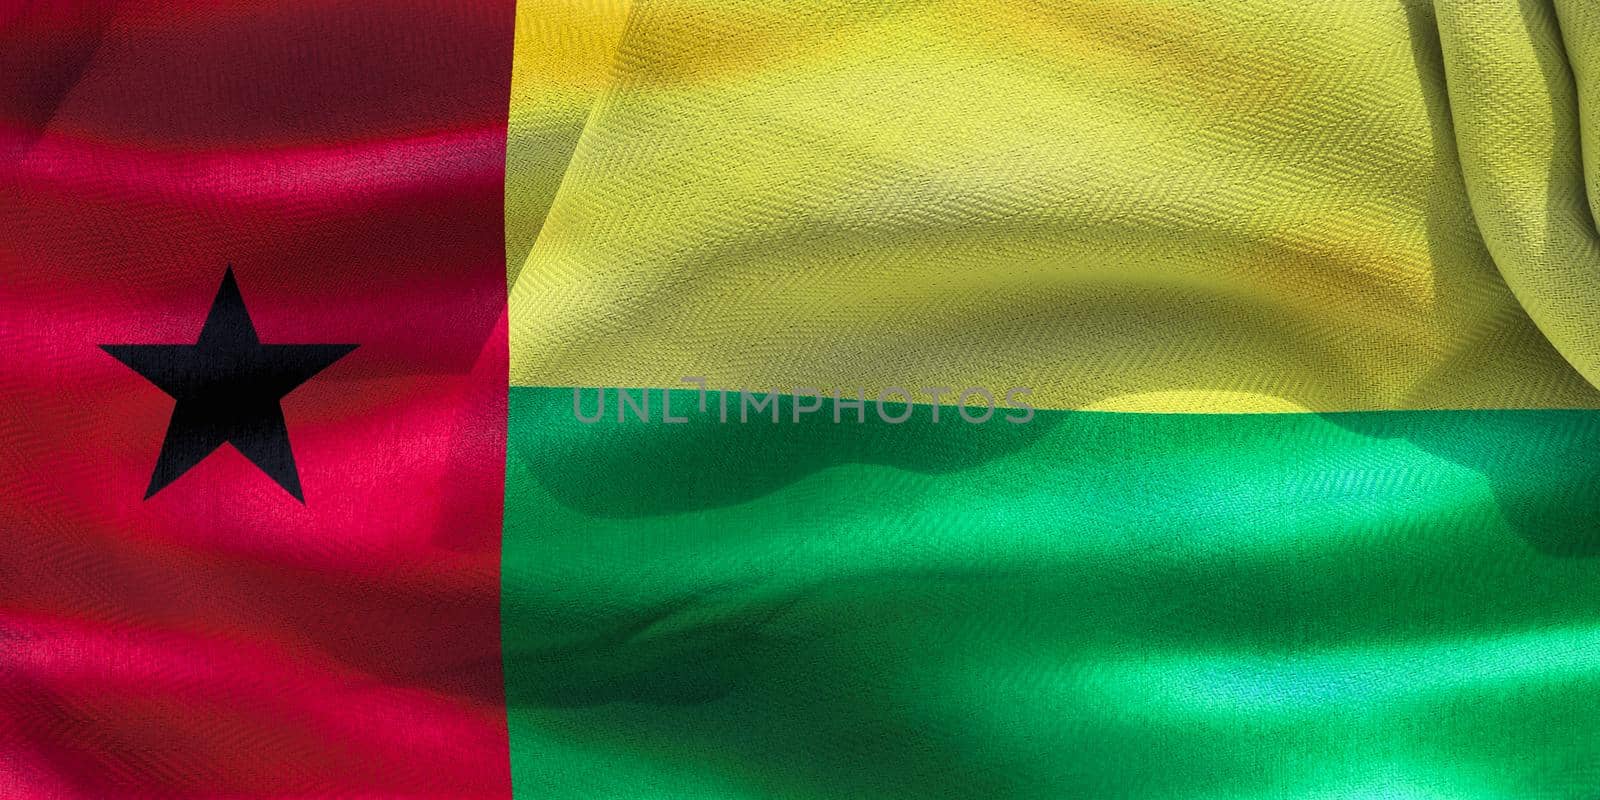 Guinea-Bissau flag - realistic waving fabric flag by MP_foto71